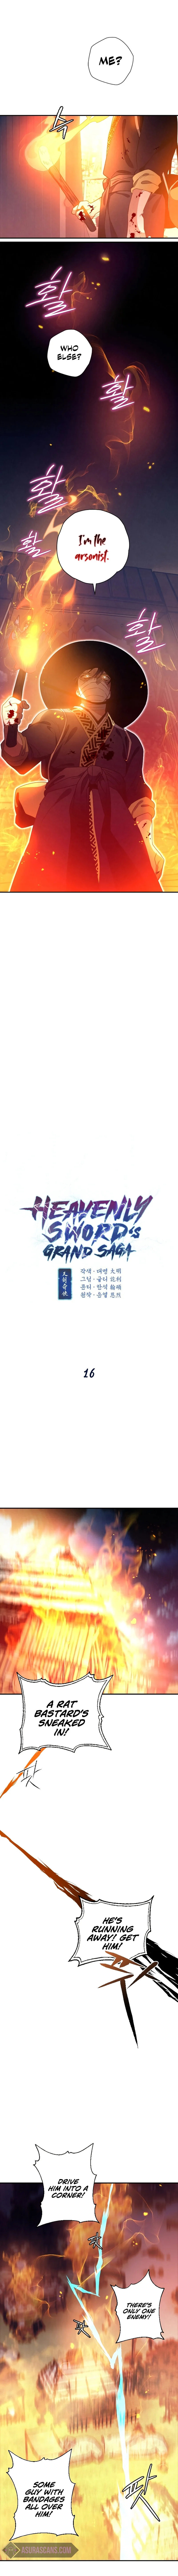 Heavenly Sword’s Grand Saga - Chapter 16 Page 1